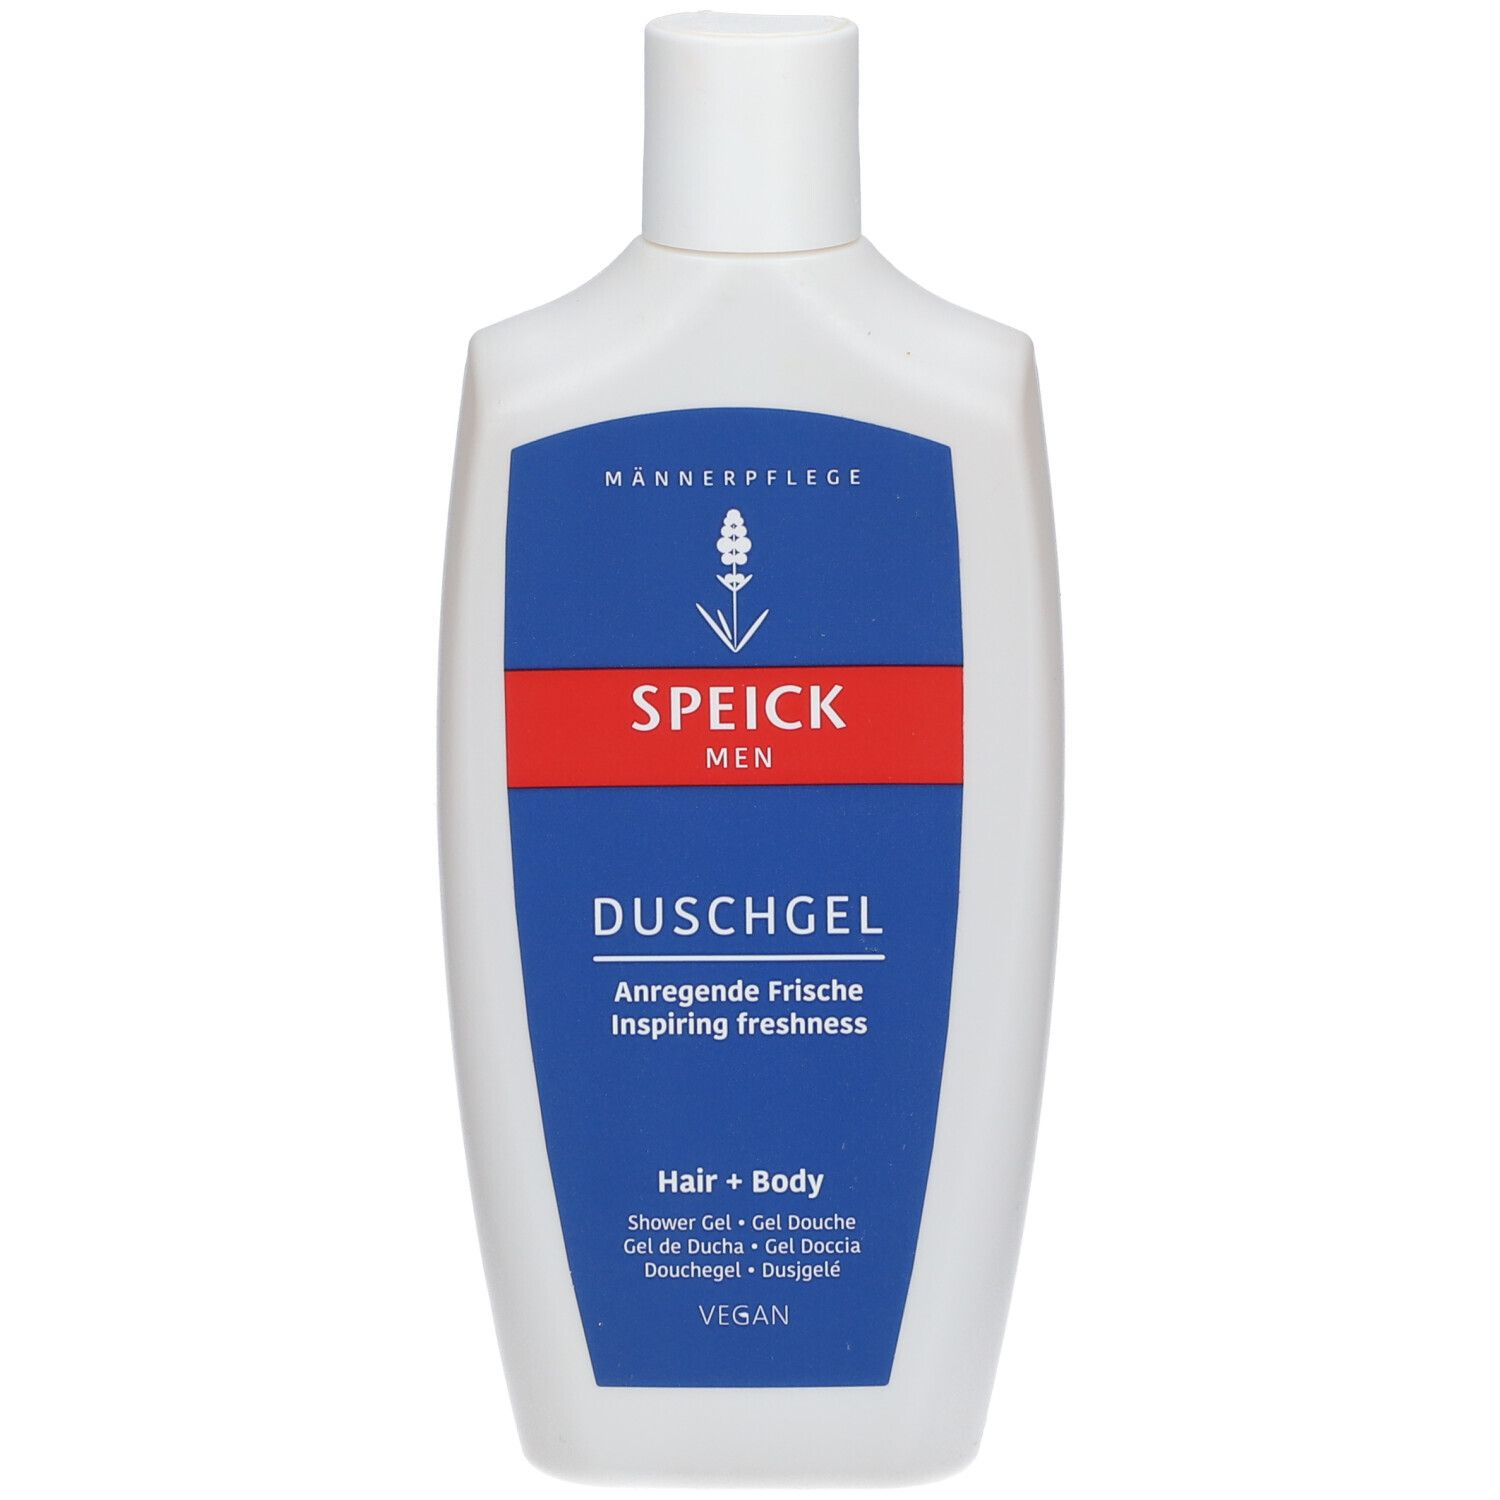 SPEICK Men Duschgel Hair + Body